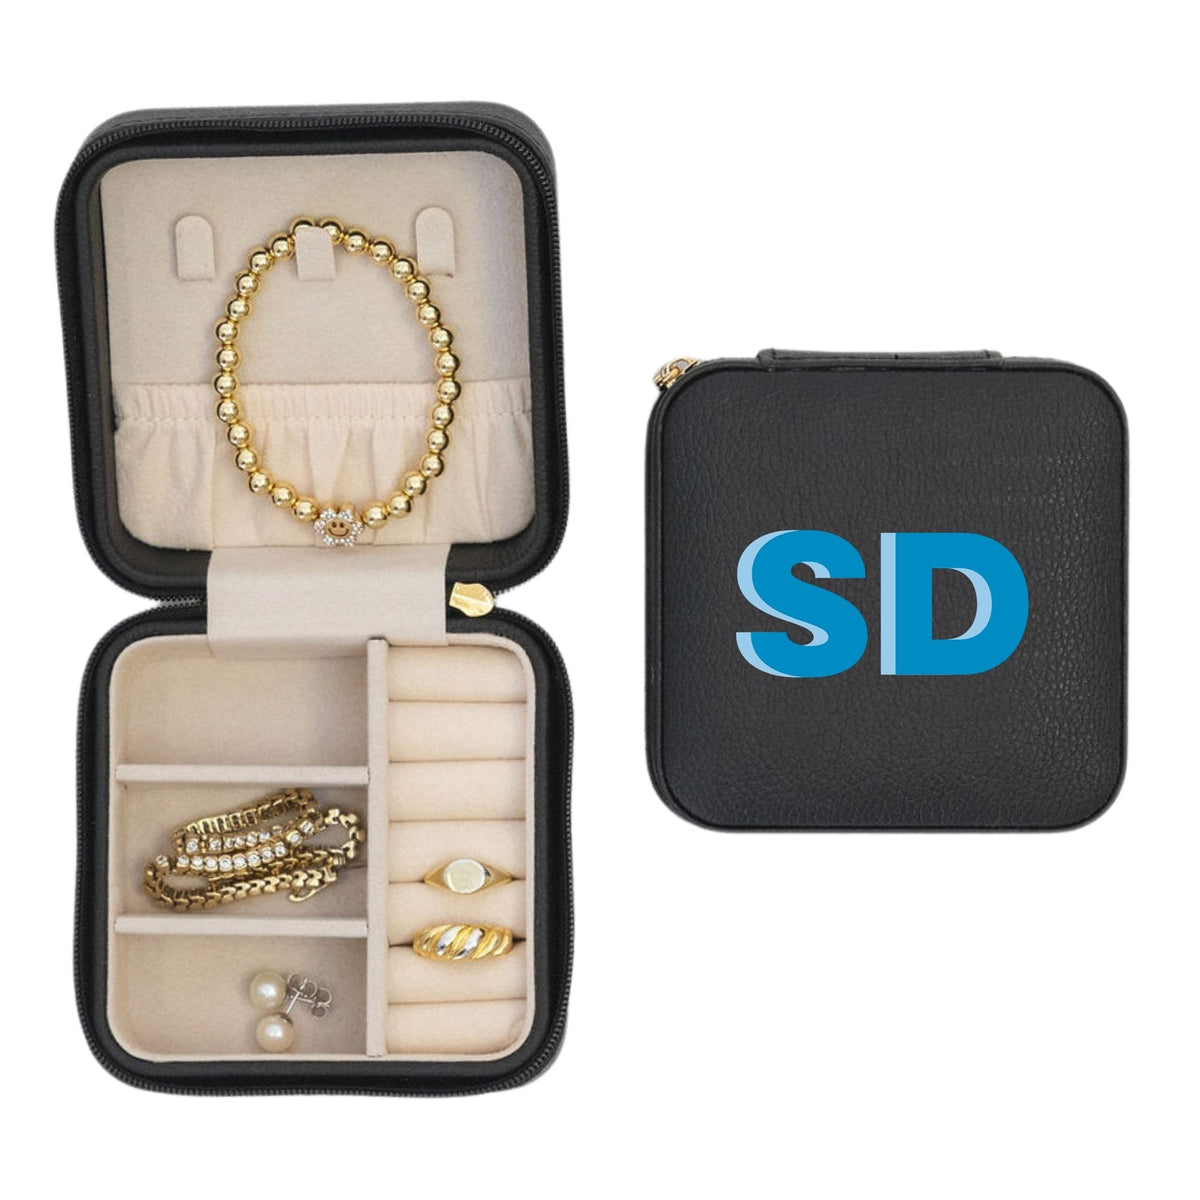 Design Your Own Custom Travel Jewelry Box